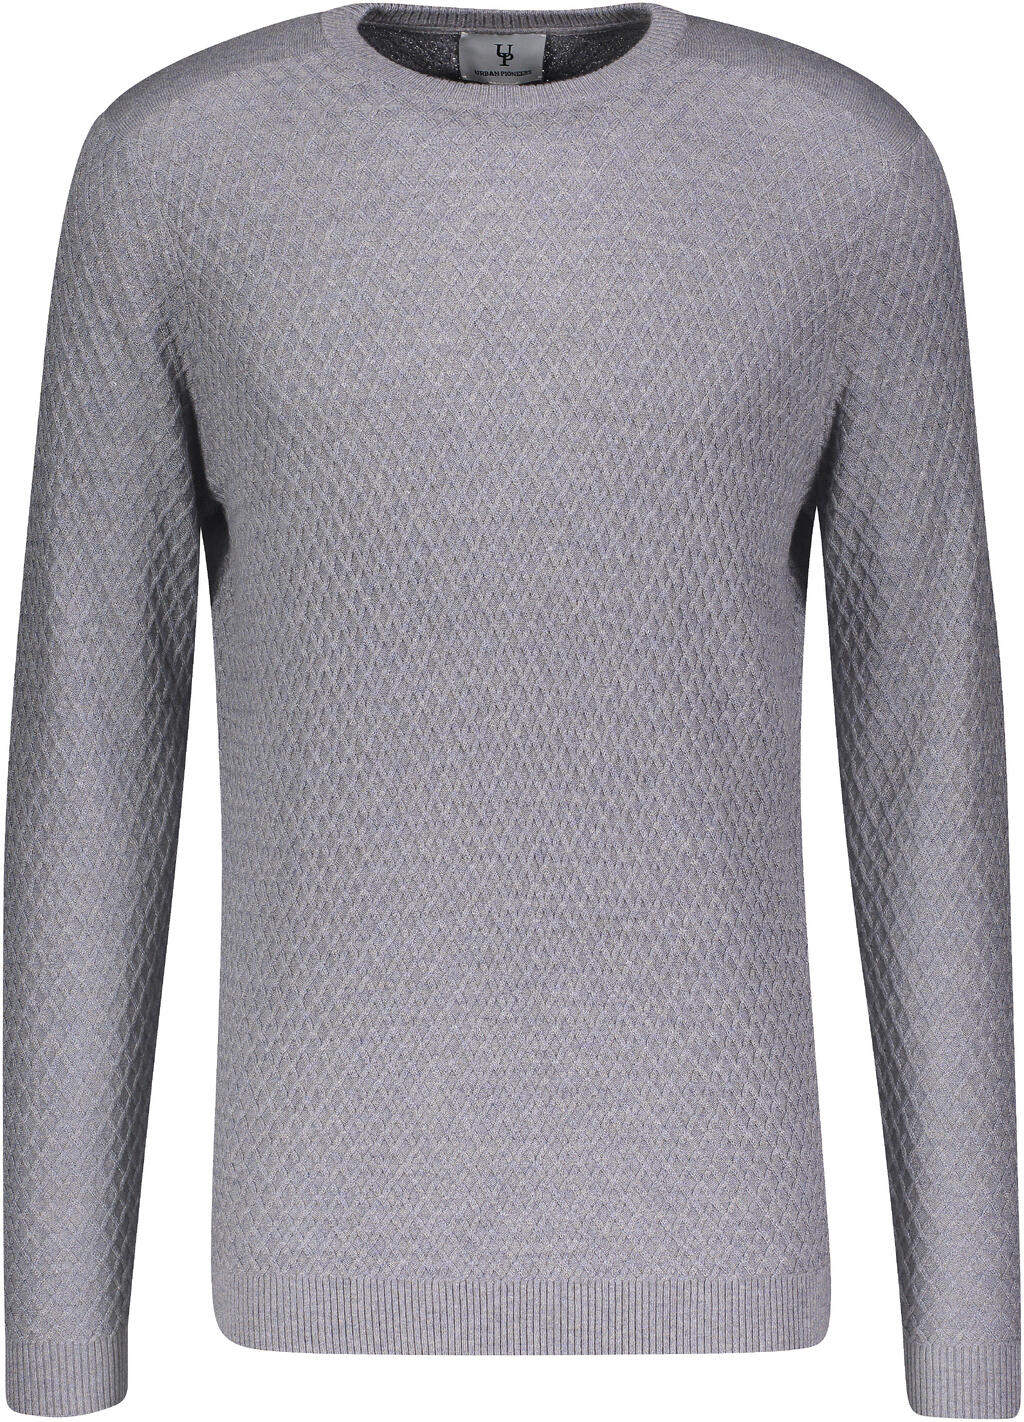 Kenny Sweater Diamond pattern sweater - Urban Pioneers AS